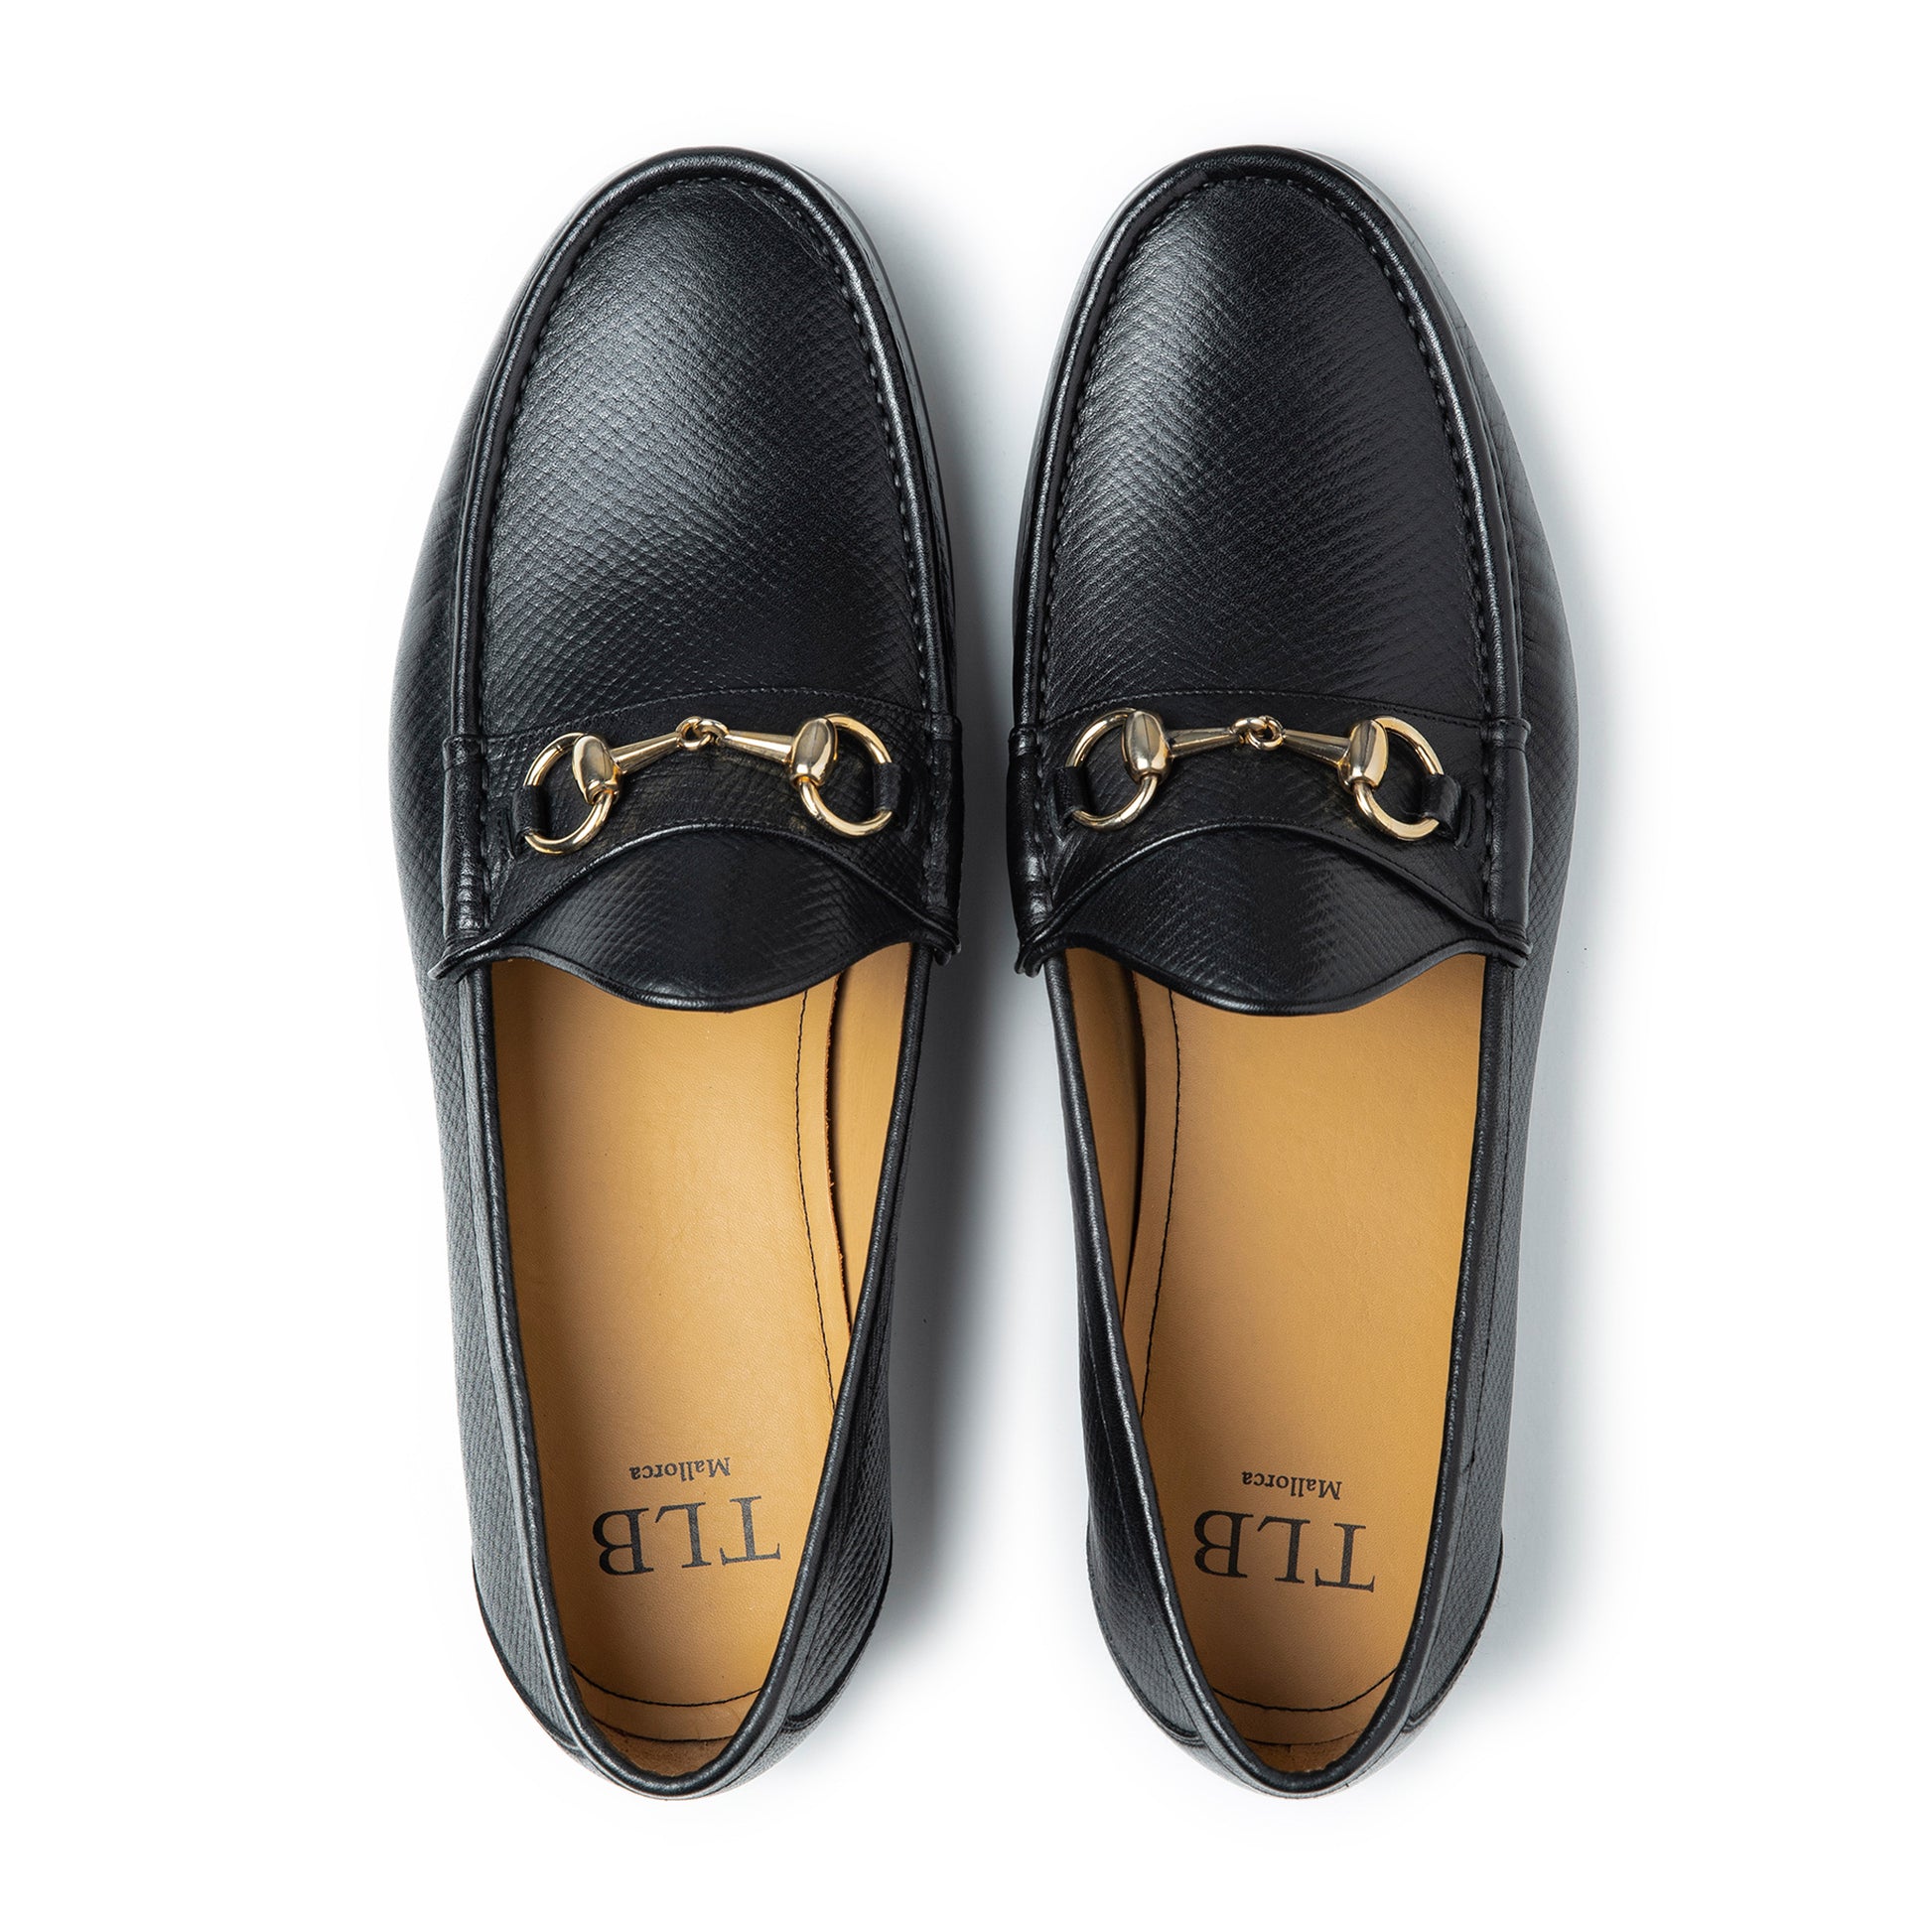 Men's Gucci Horsebit Penny Loafers Dress Shoes Size 12.5 Black Leather